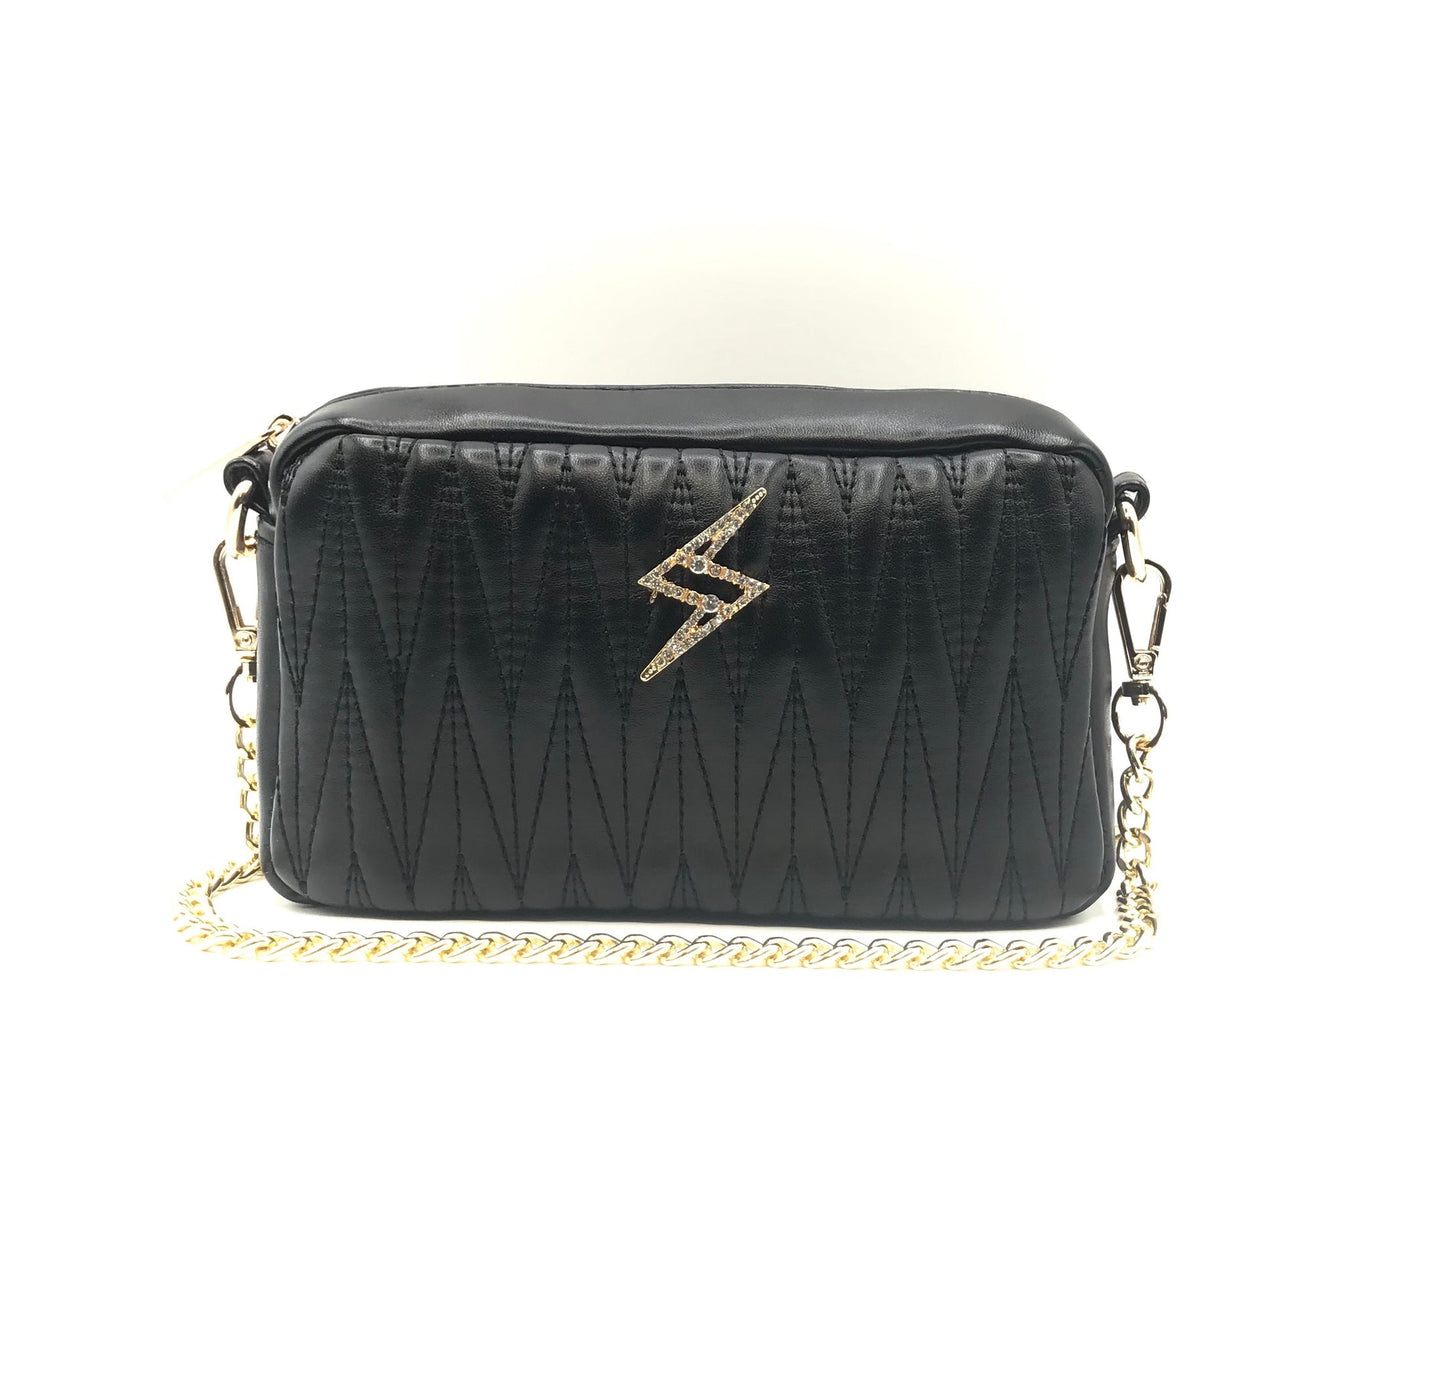 Rivington Handbag in vegan leather in black - optional pins to choose from